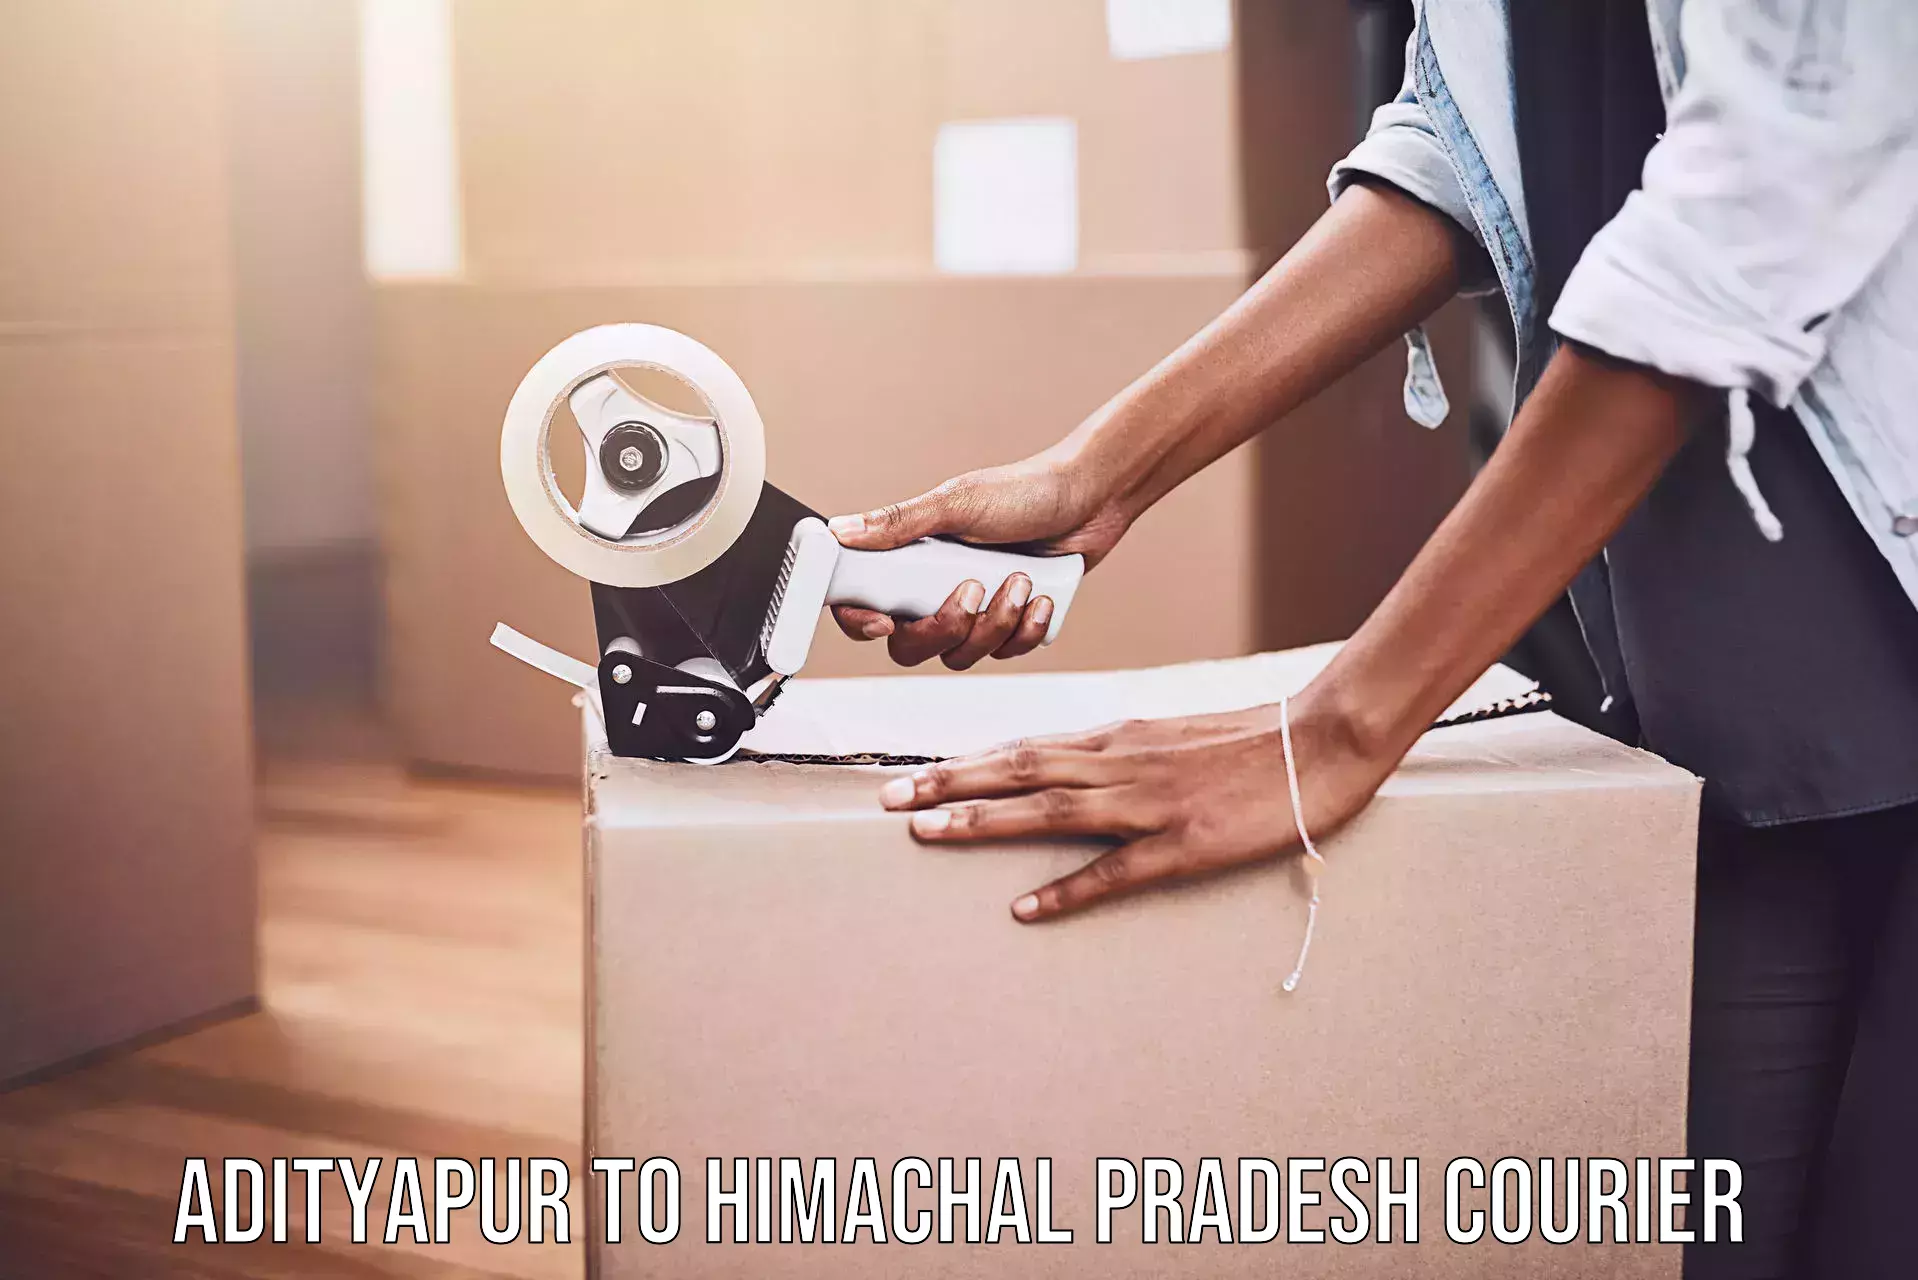 Automated parcel services Adityapur to Himachal Pradesh